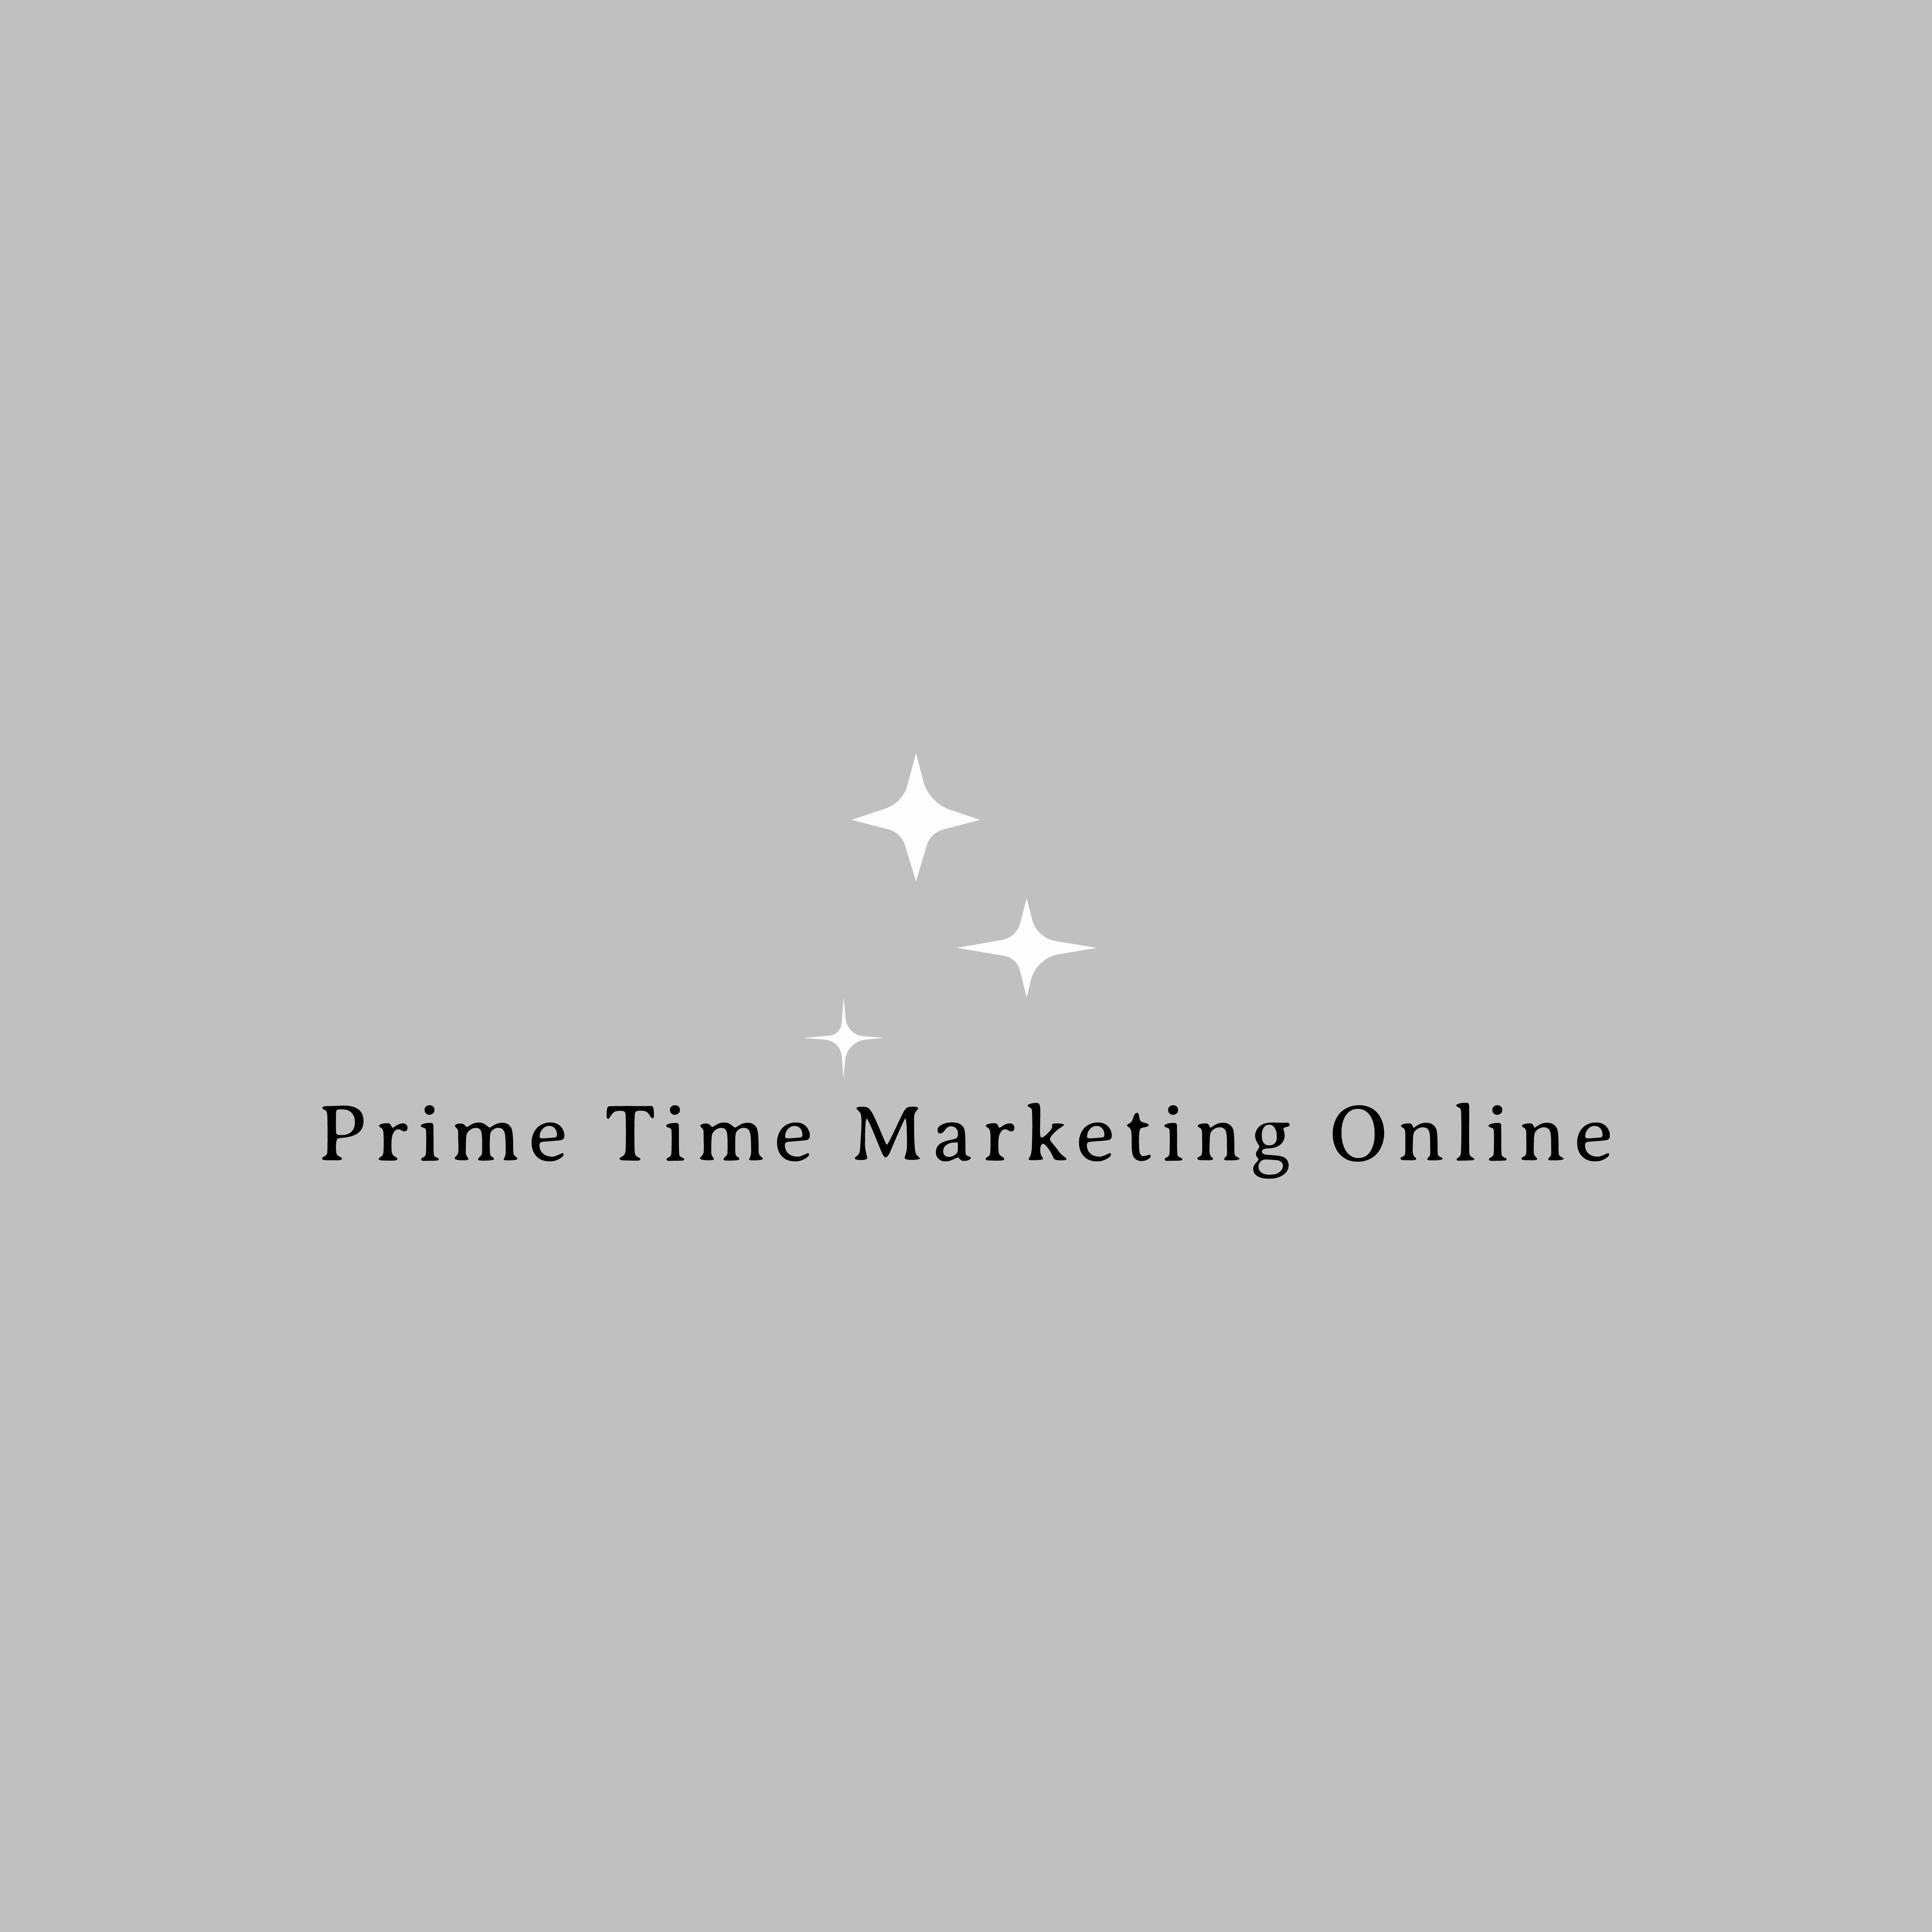 Prime Time Marketing Online Logo